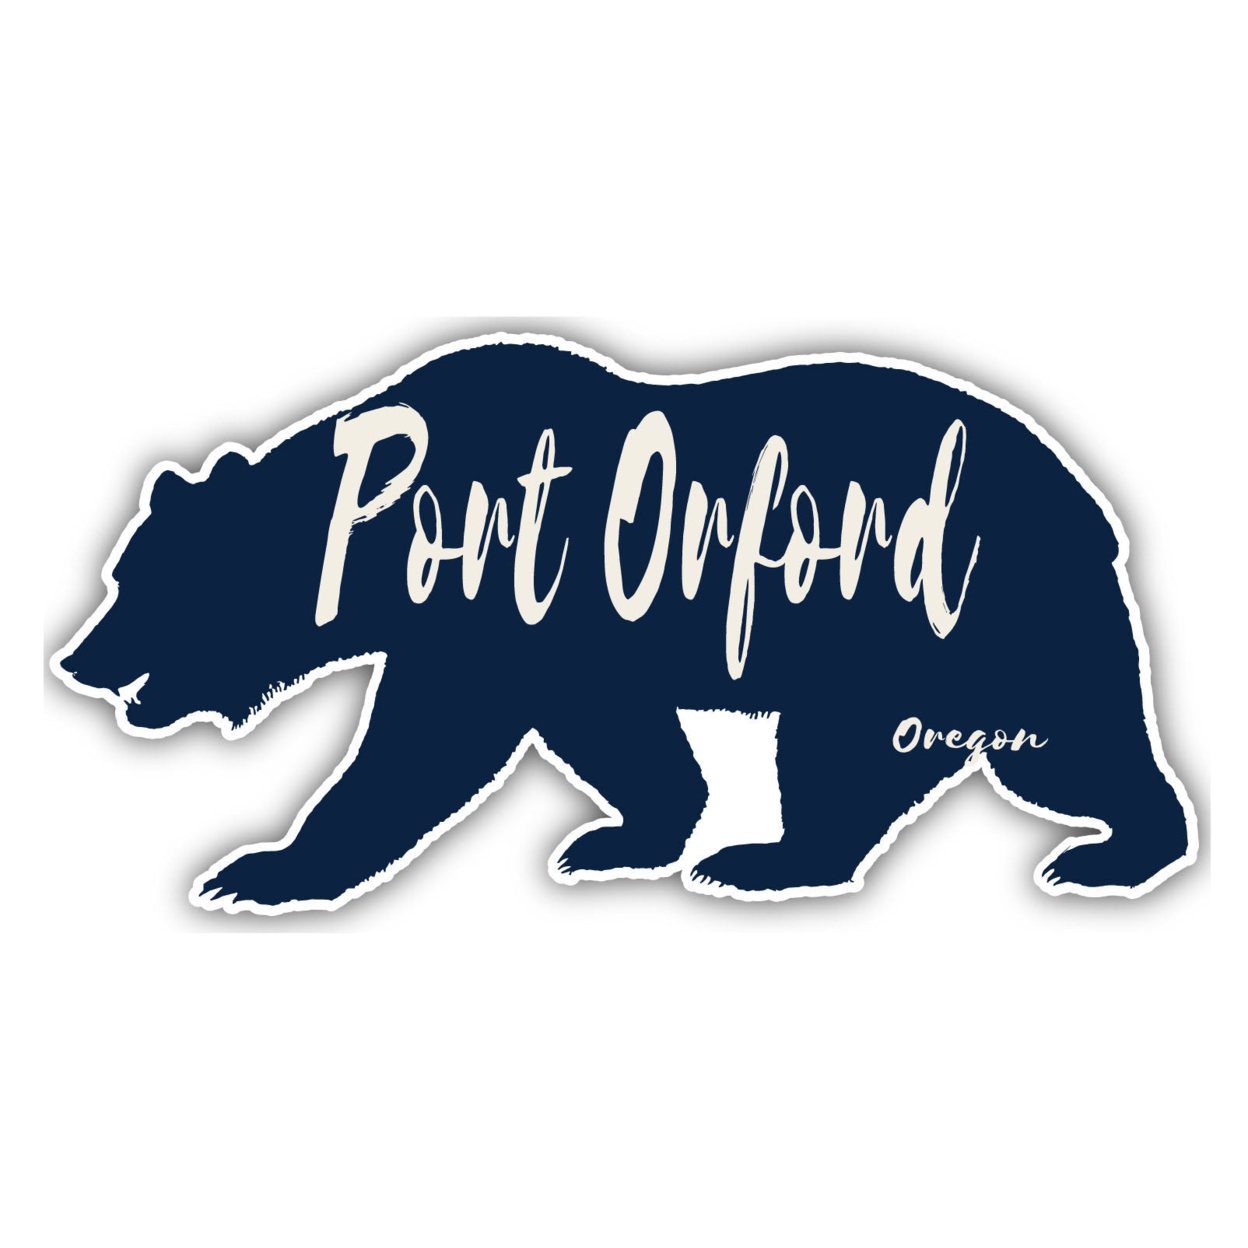 Port Orford Oregon Souvenir Decorative Stickers (Choose Theme And Size) - Single Unit, 4-Inch, Bear